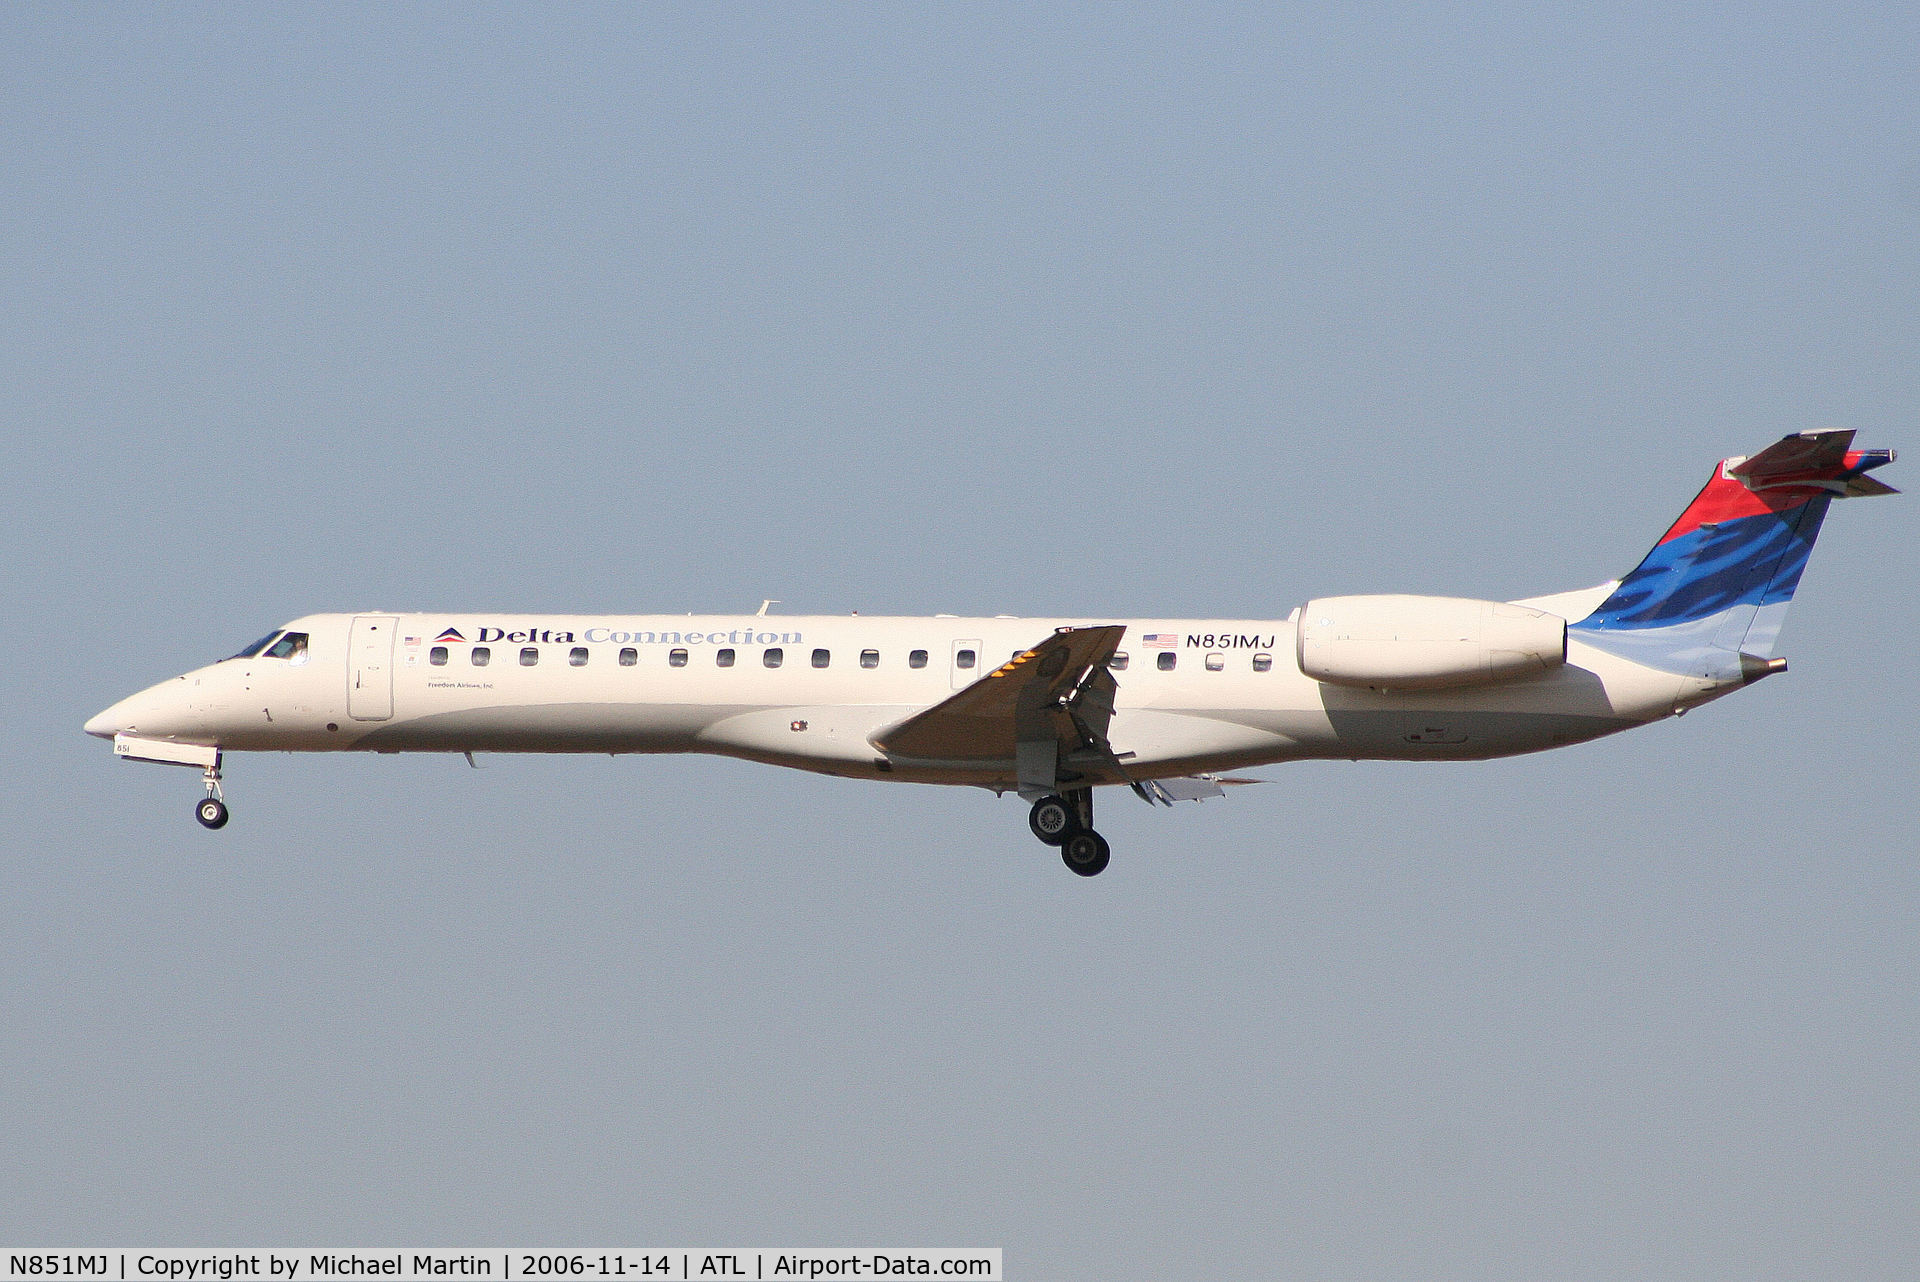 N851MJ, 2002 Embraer EMB-145LR C/N 145572, Over the numbers of 27L